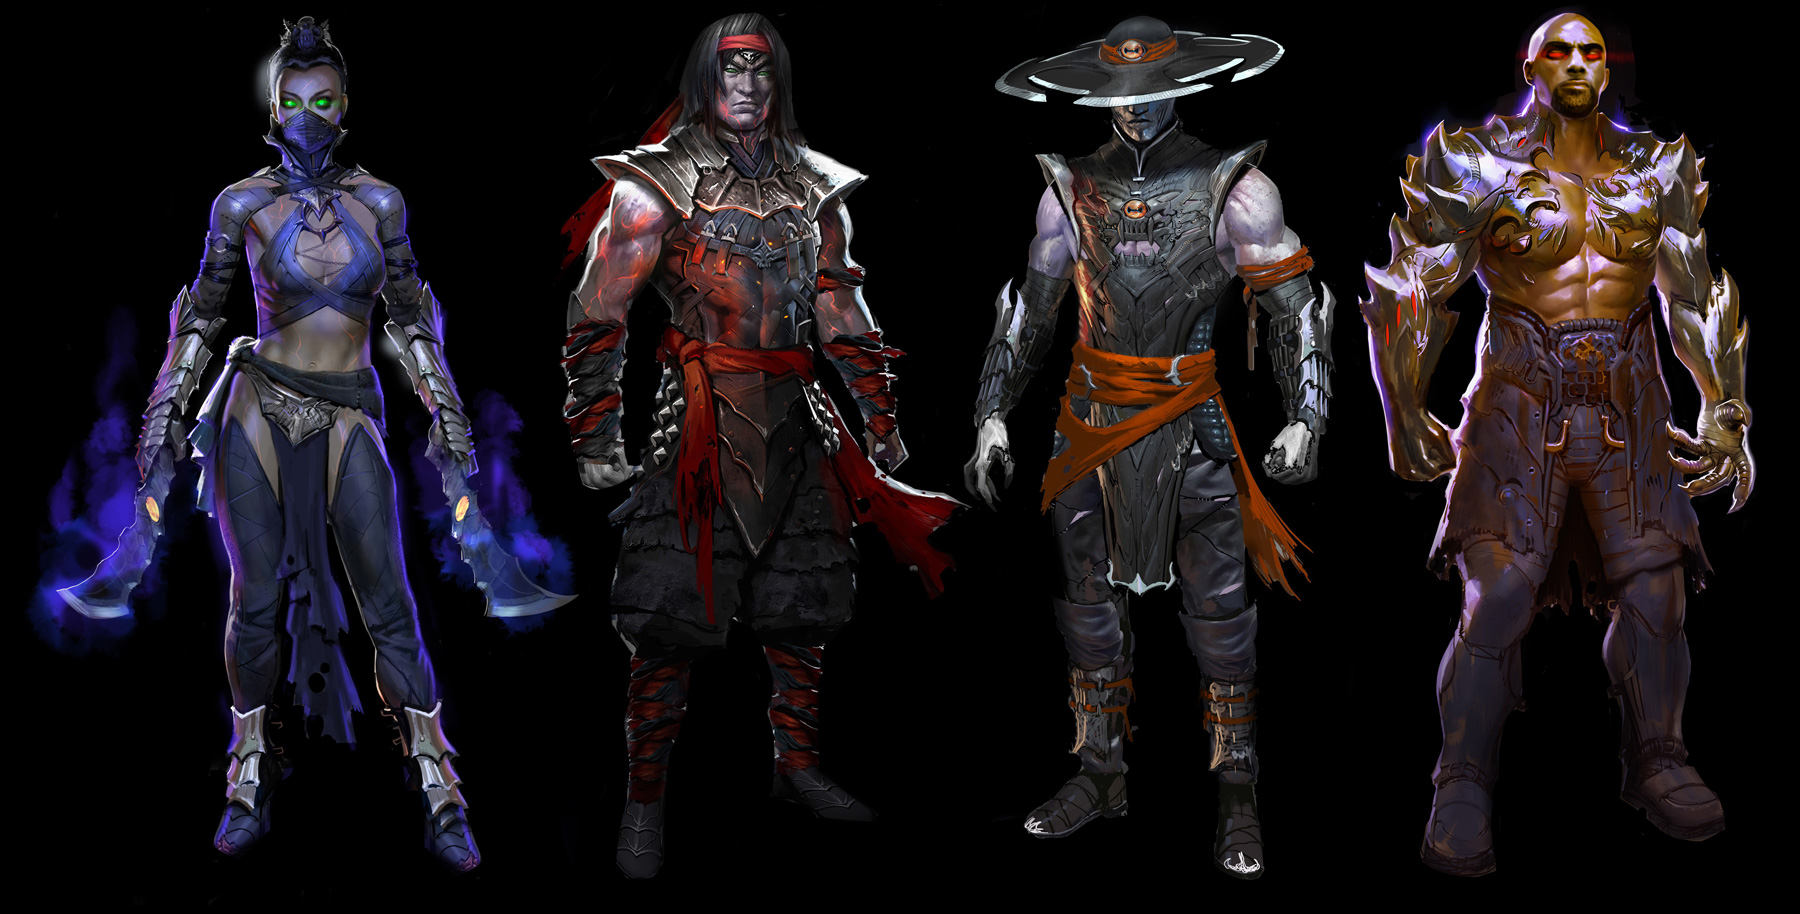 Raiden Portrait - Characters & Art - Mortal Kombat  Mortal kombat 9, Mortal  kombat, Mortal kombat art